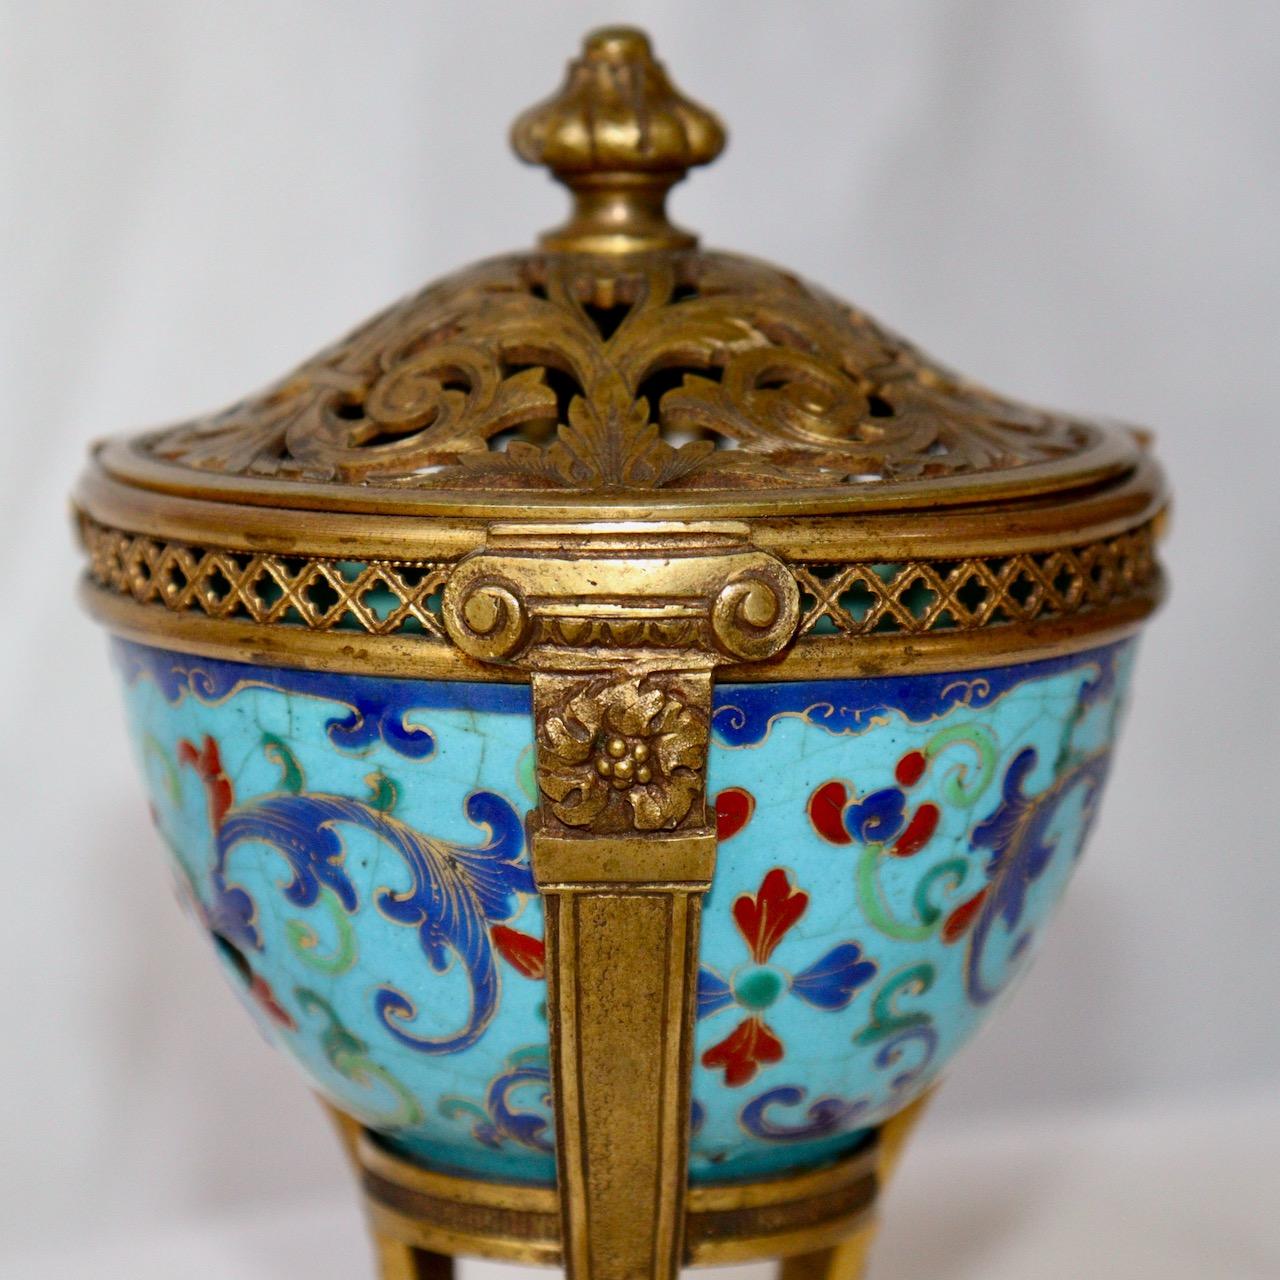 Vase aus gebürstetem Parfüm oder Topf Pourri aus dem 19. Jahrhundert (Louis XVI.)